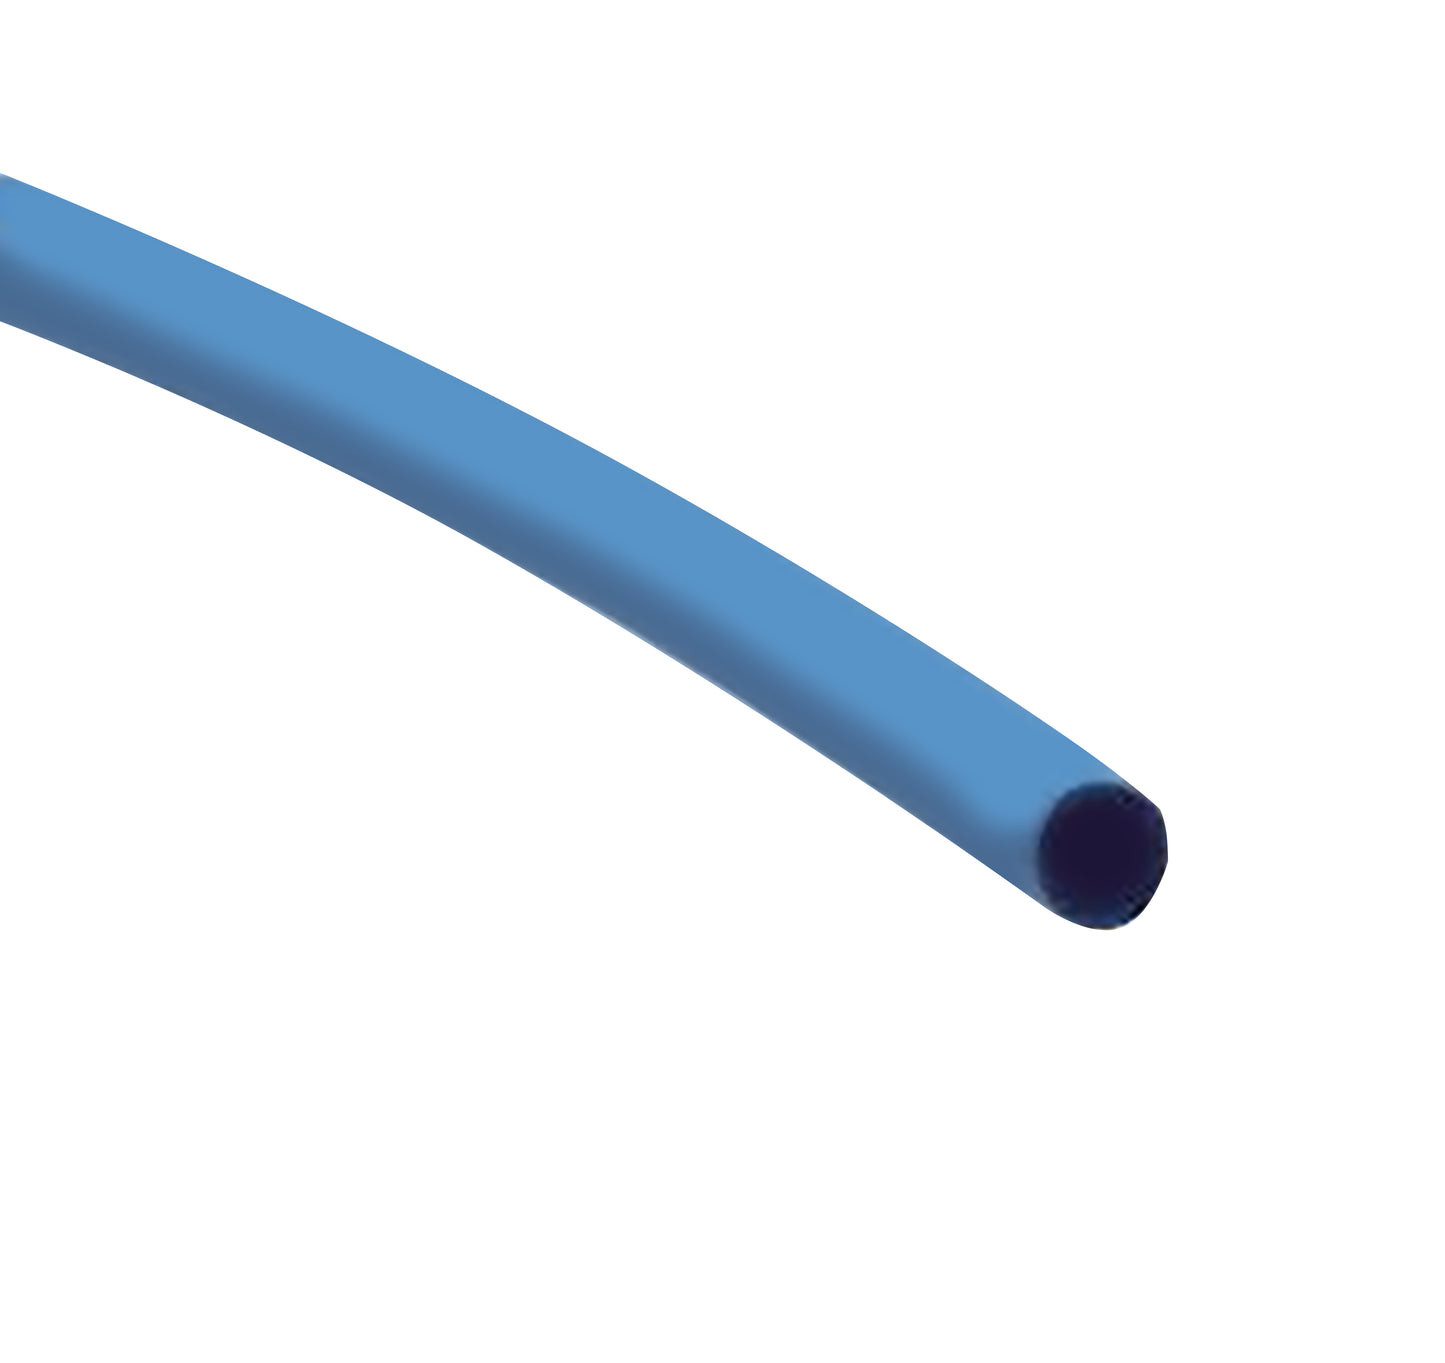 Flexible Thin Single Wall Non-Adhesive Heat Shrink Tubing 2:1 Blue 3/4" ID - 25' Ft Spool